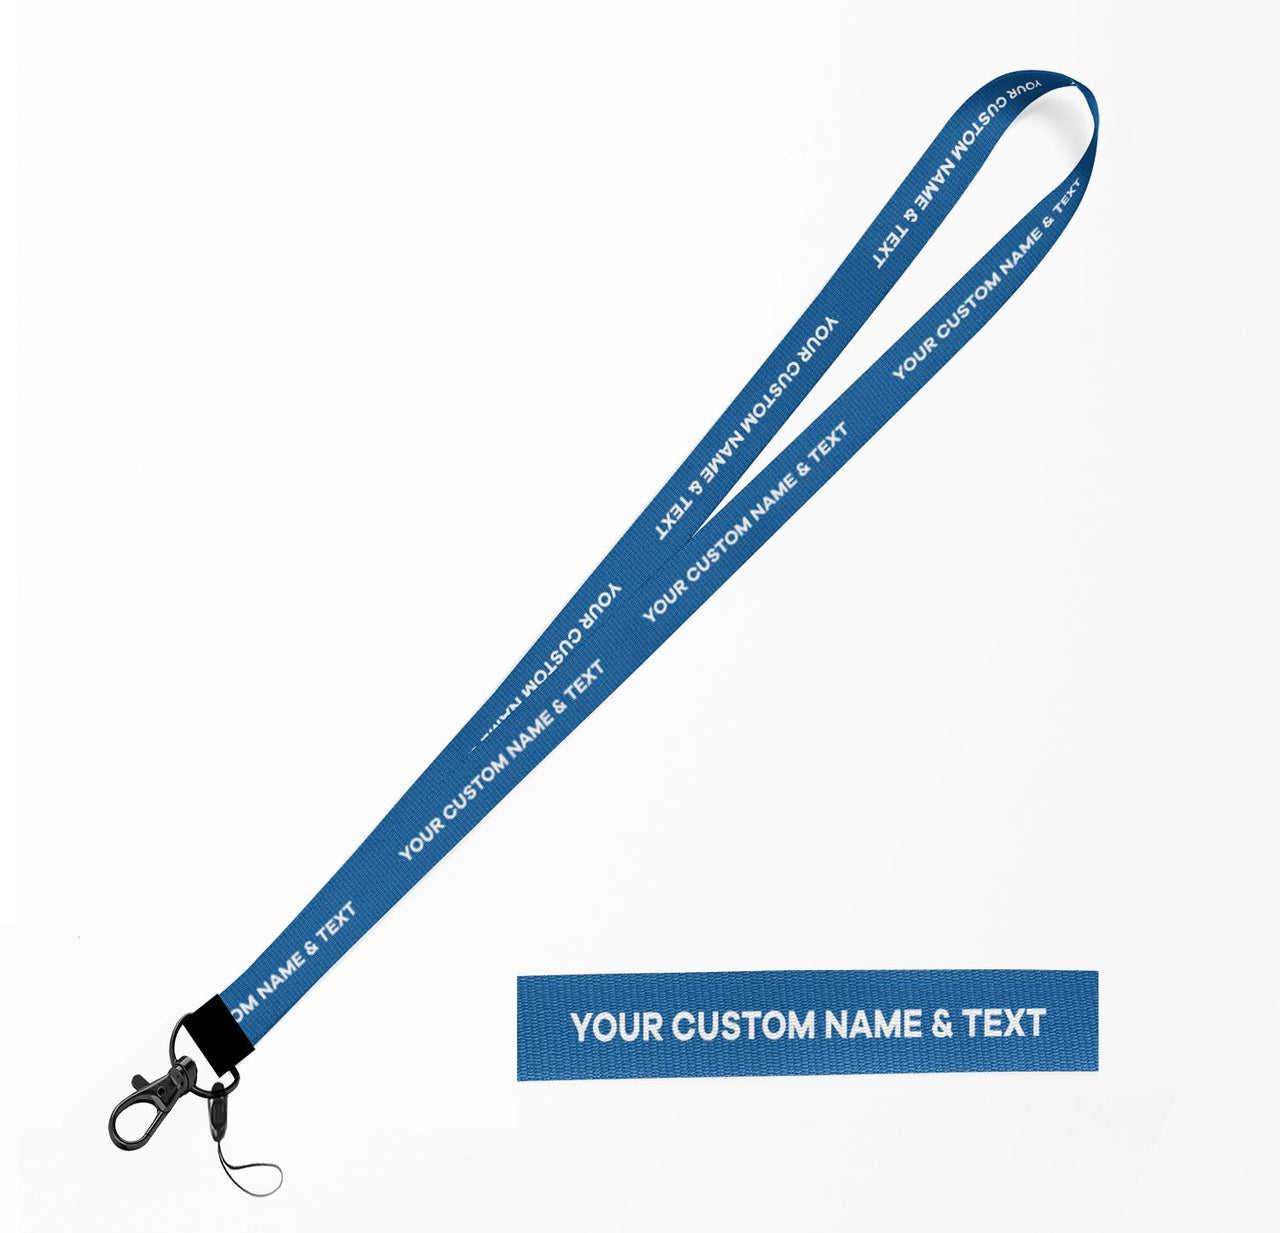 Your Custom Text Designed Lanyard & ID Holders